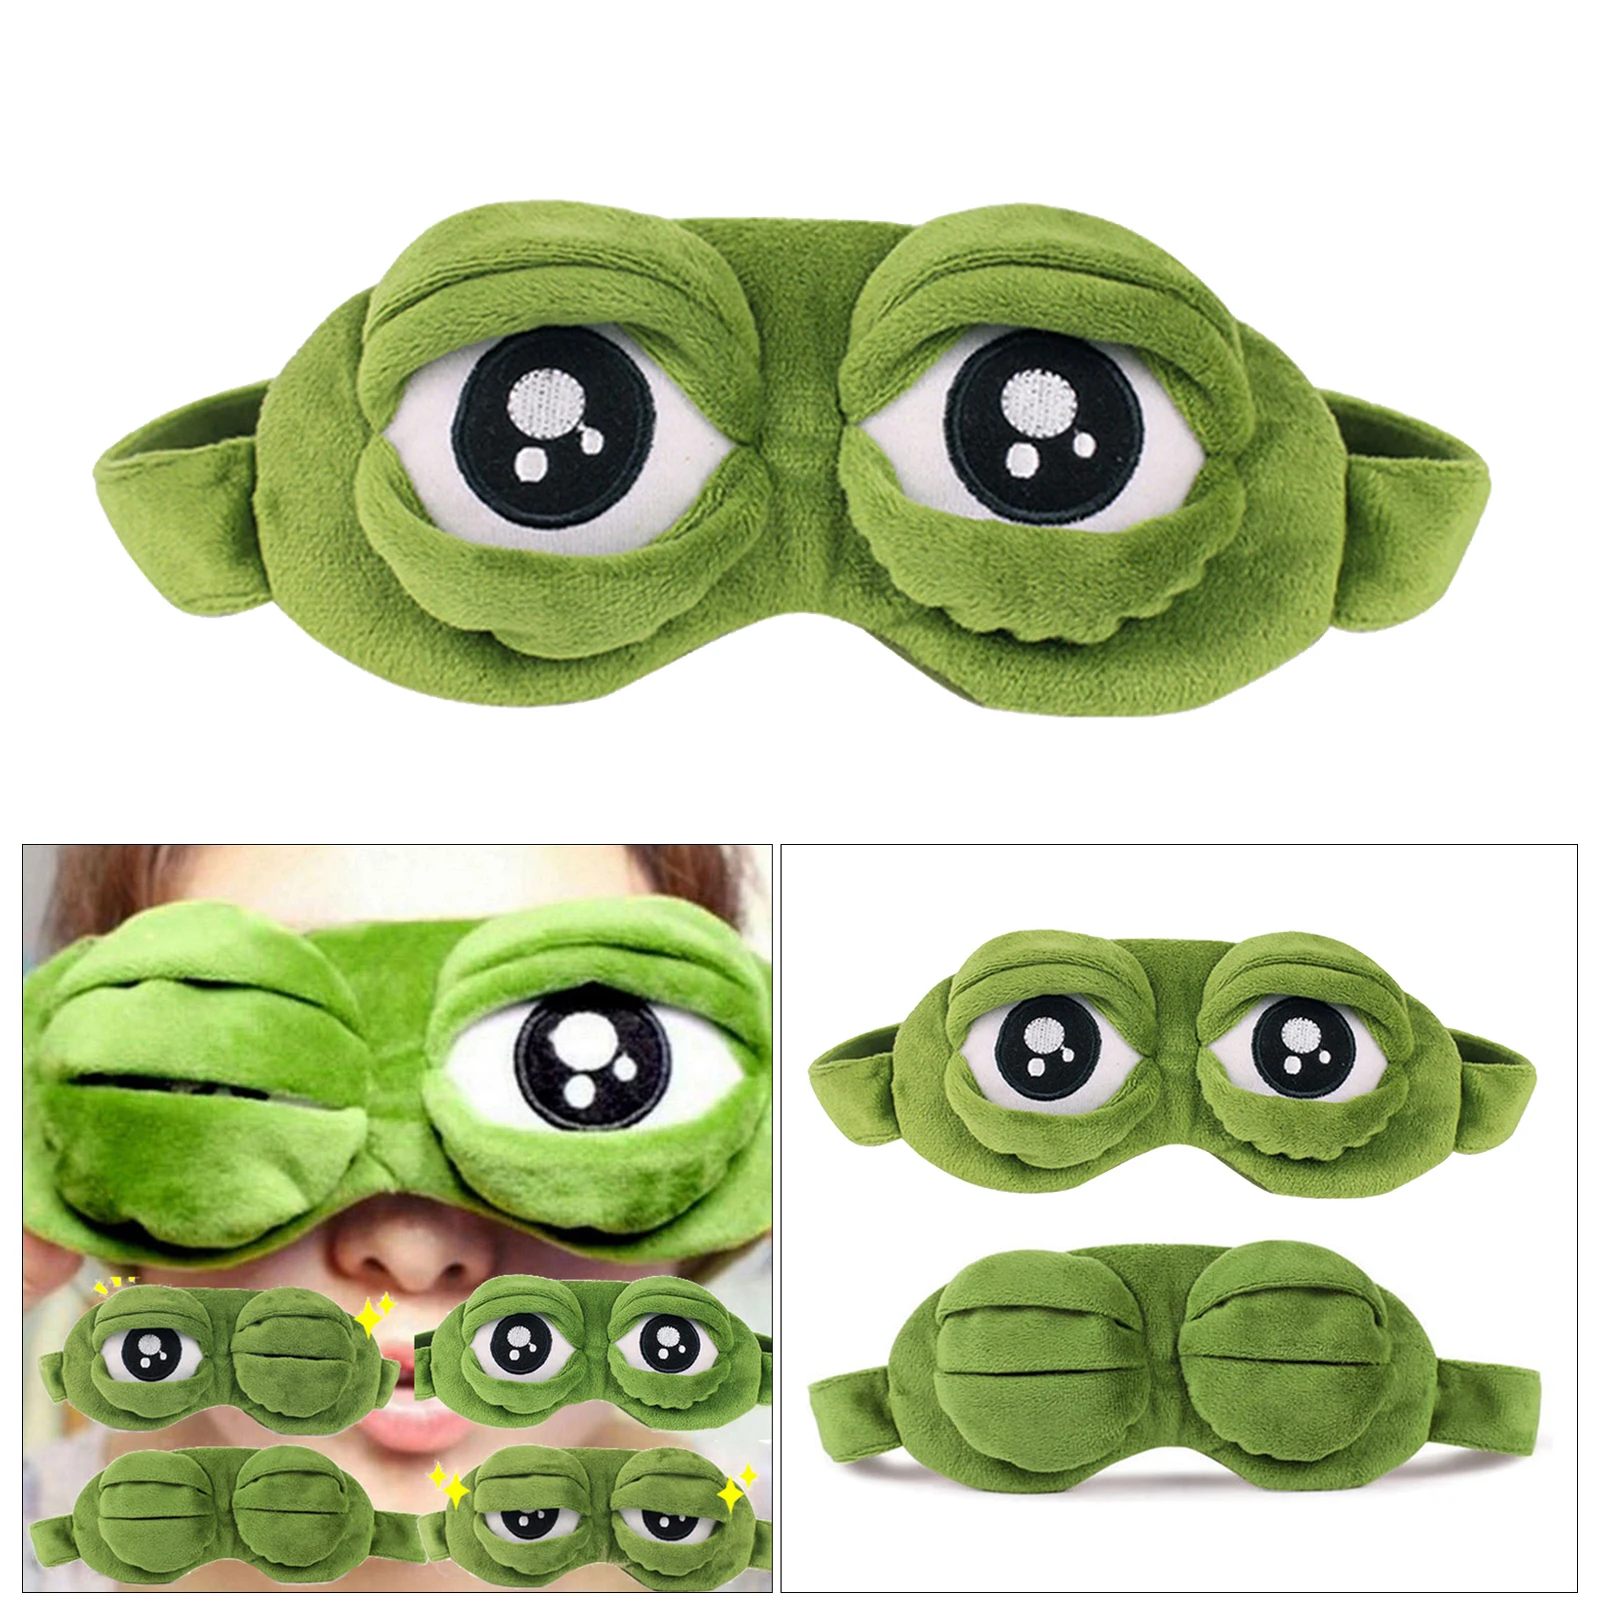 Soft Cotton Sleeping Mask Frog Blindfold Travel Sleep Eye Cover Girl Gift